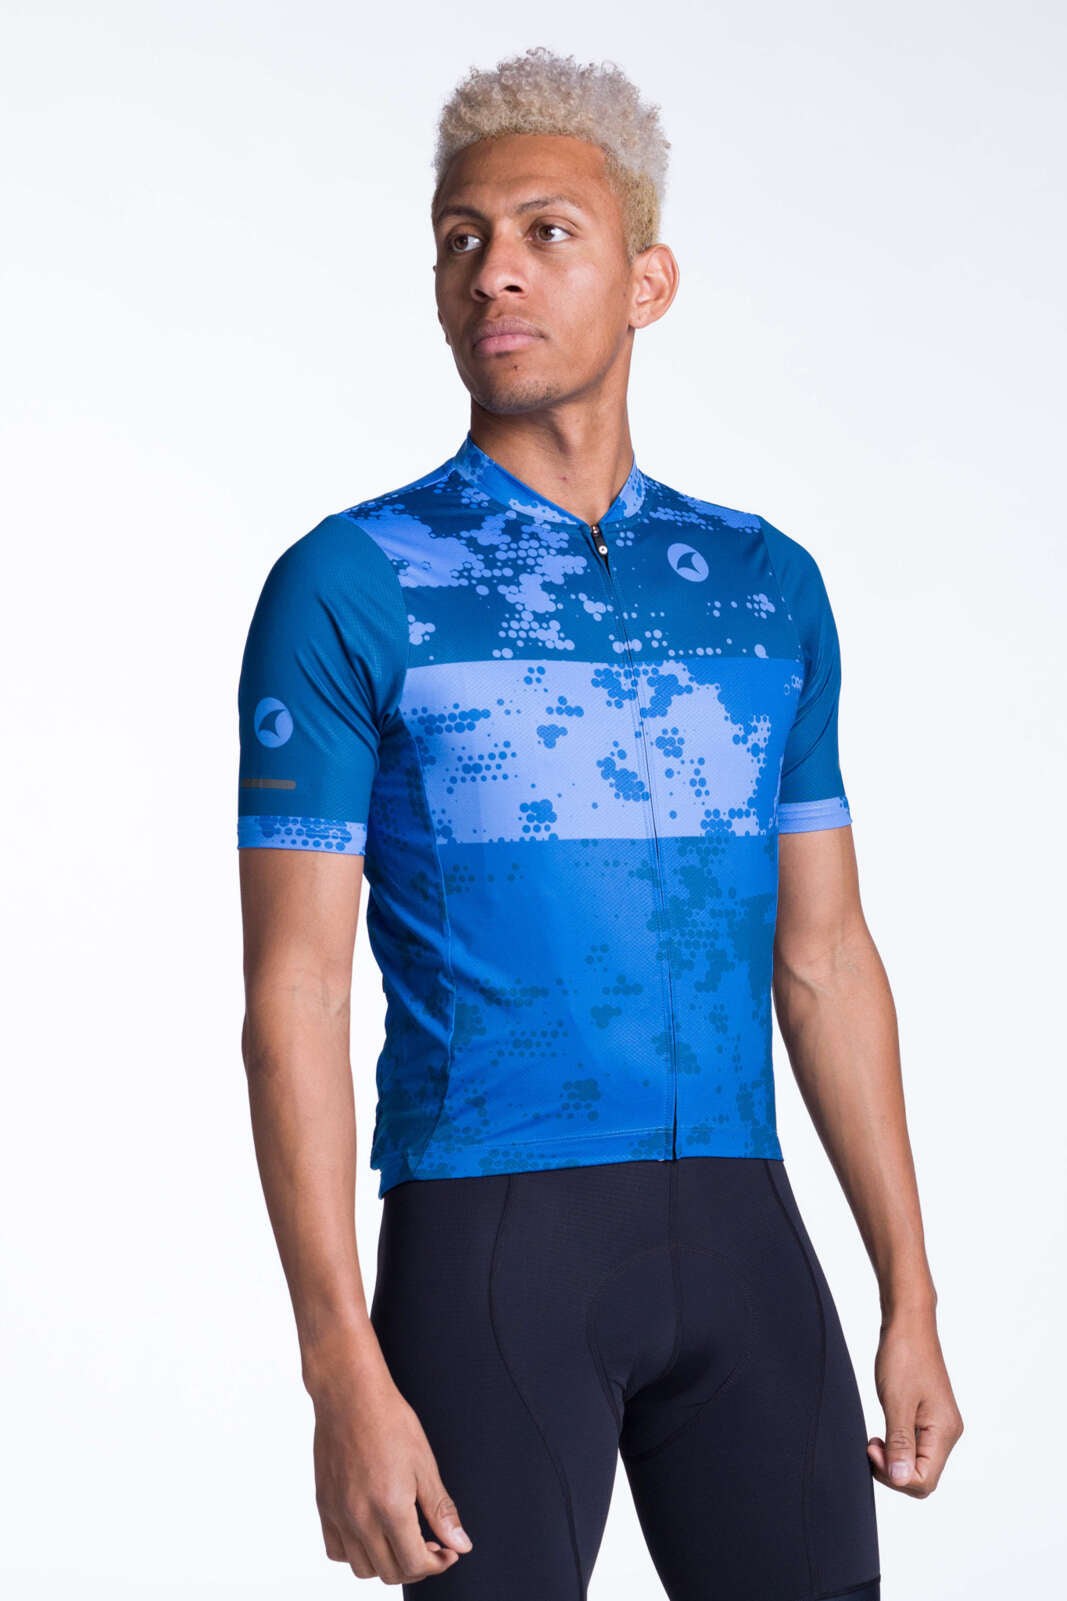 Men's Blue Bike Jersey - Ascent Disperse Front View